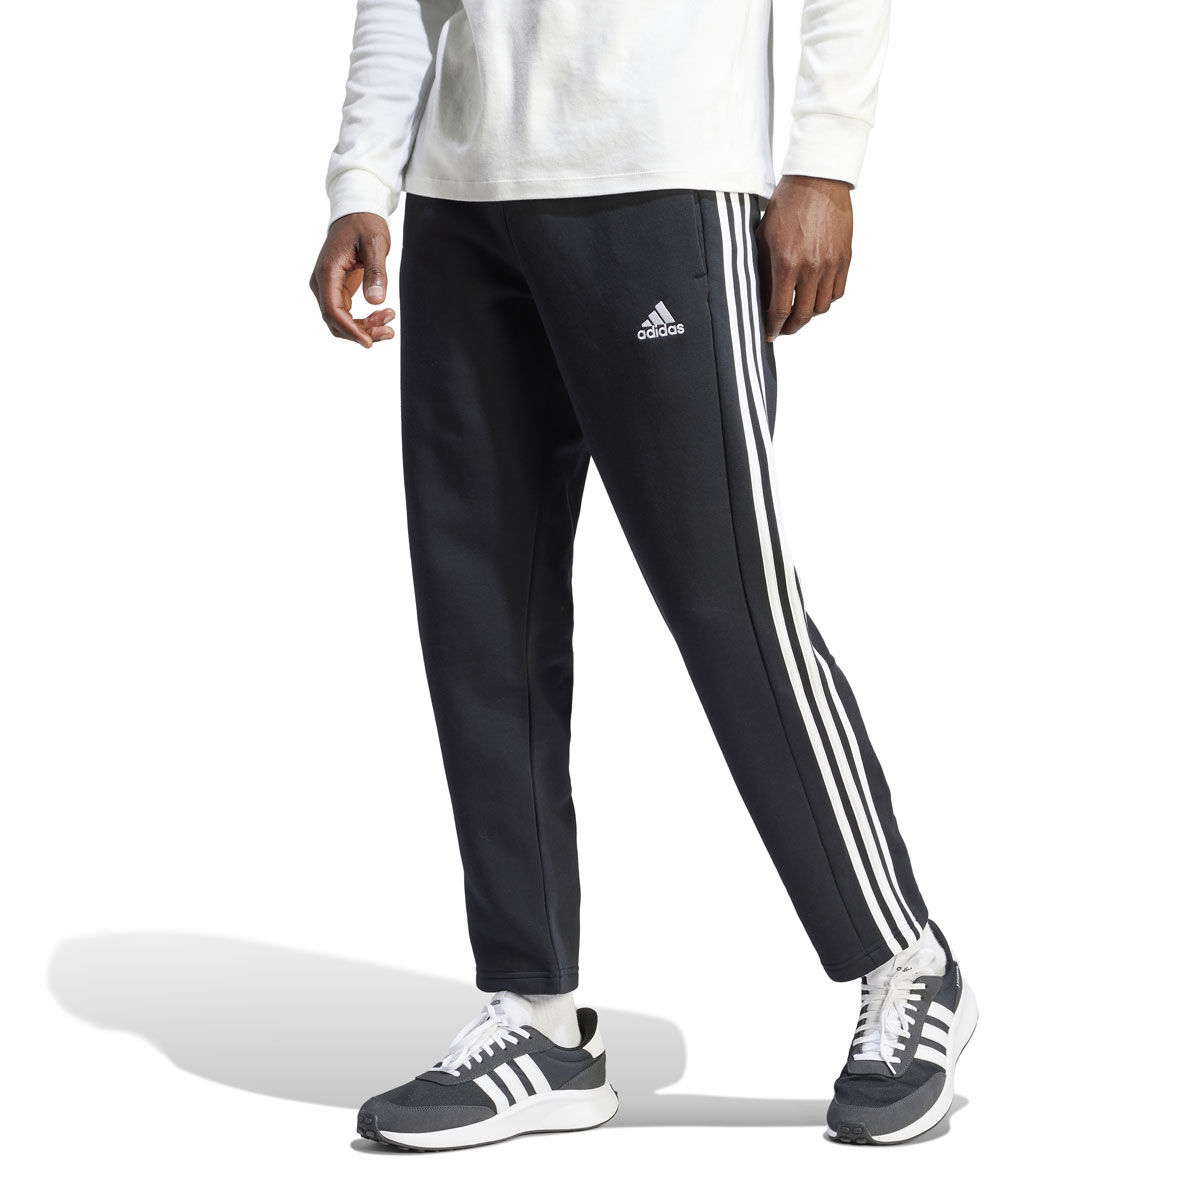 adidas Originals Superstar Fleece Track Pants Hazy CopperLegend Ink LG   Amazonin Clothing  Accessories